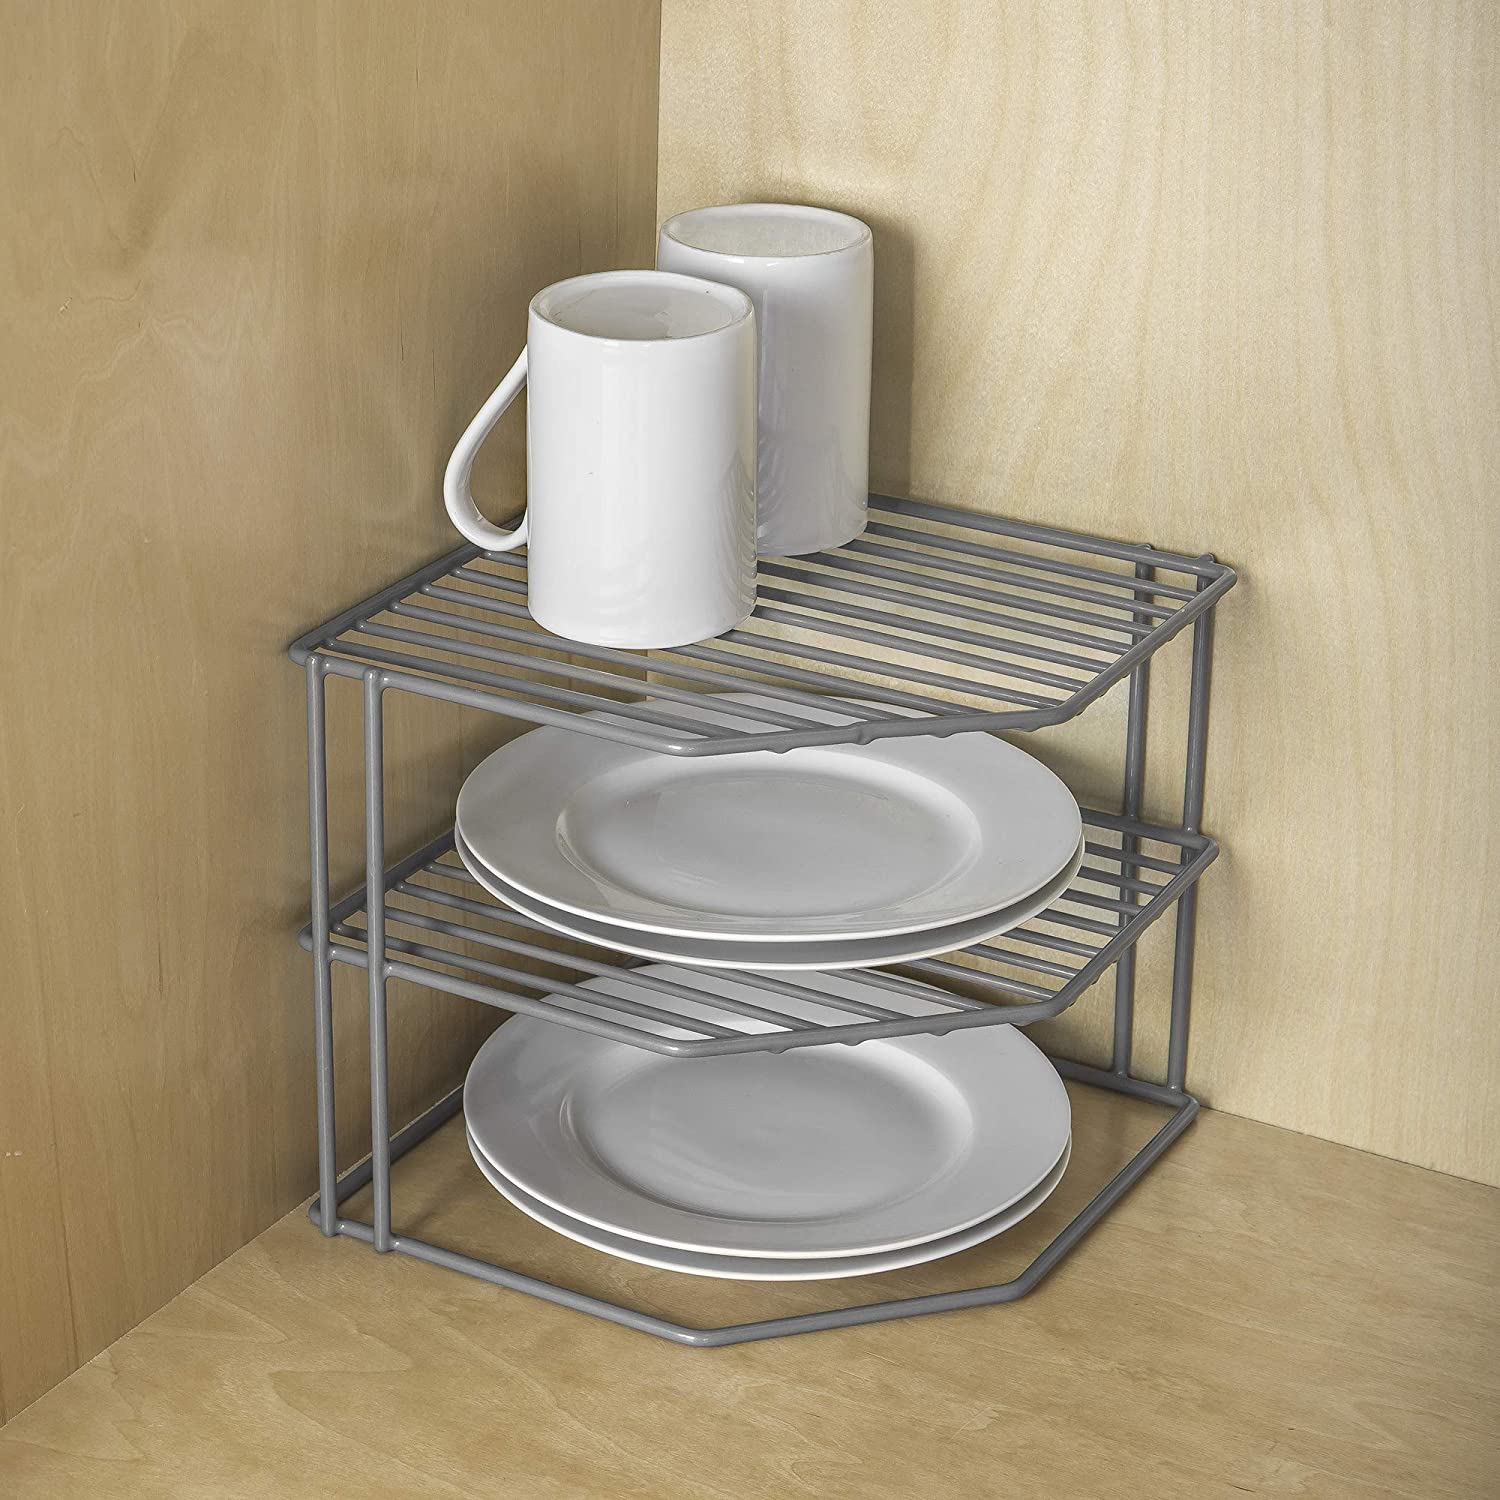 3-Tier Kitchen Corner Shelf Rack - Smart Design® 16